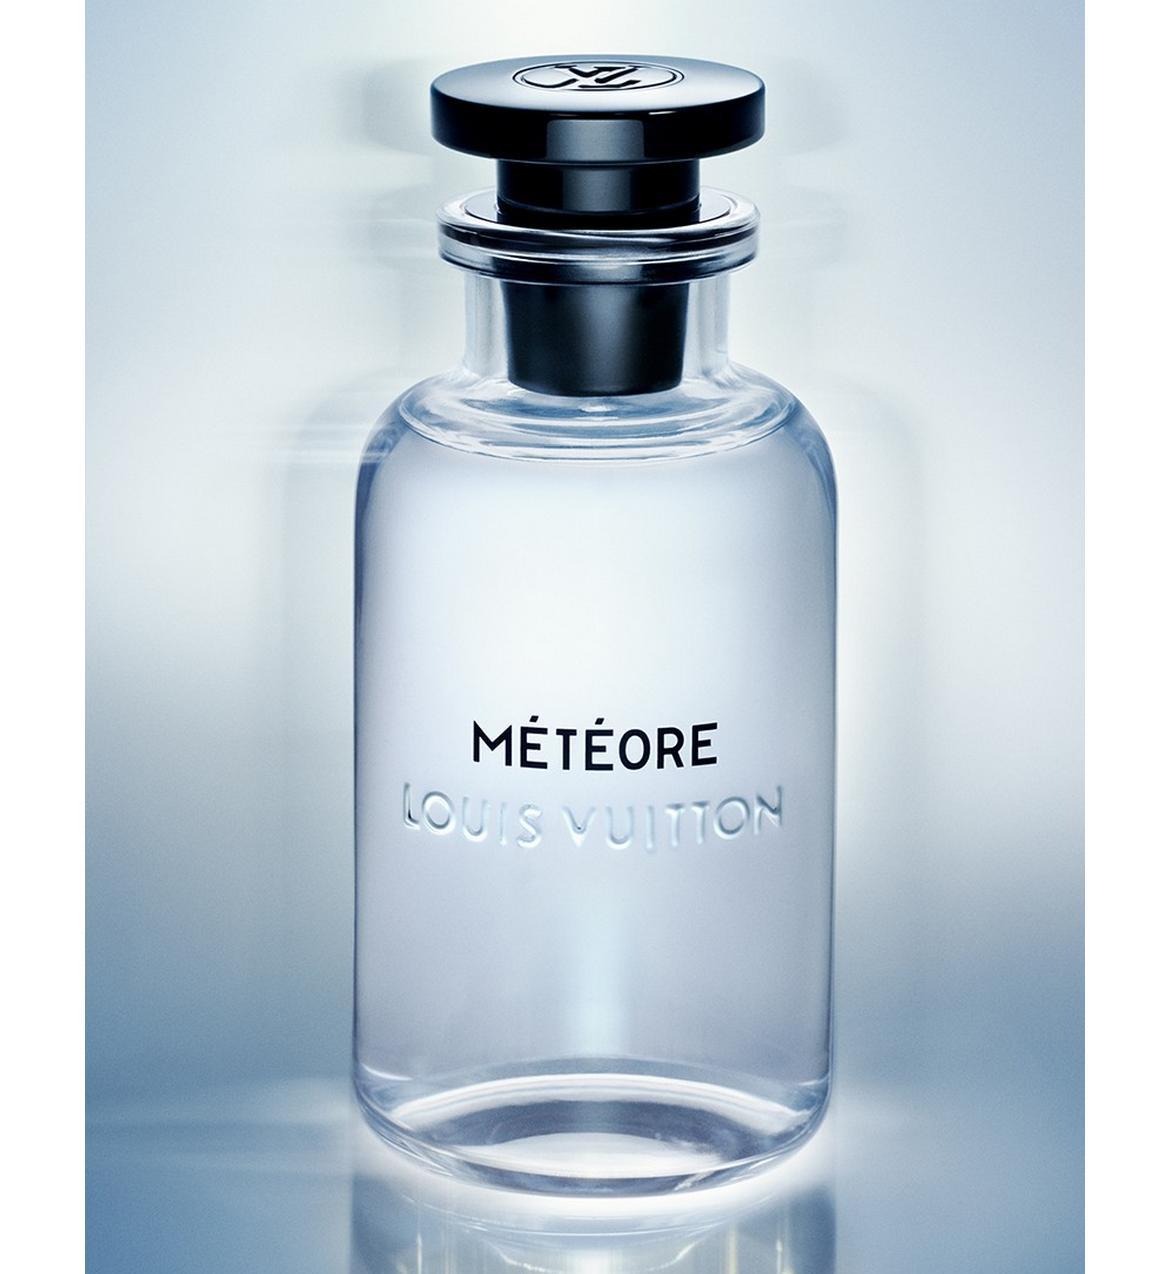 Louis Vuitton Météore a grand new citrusy fragrance for men